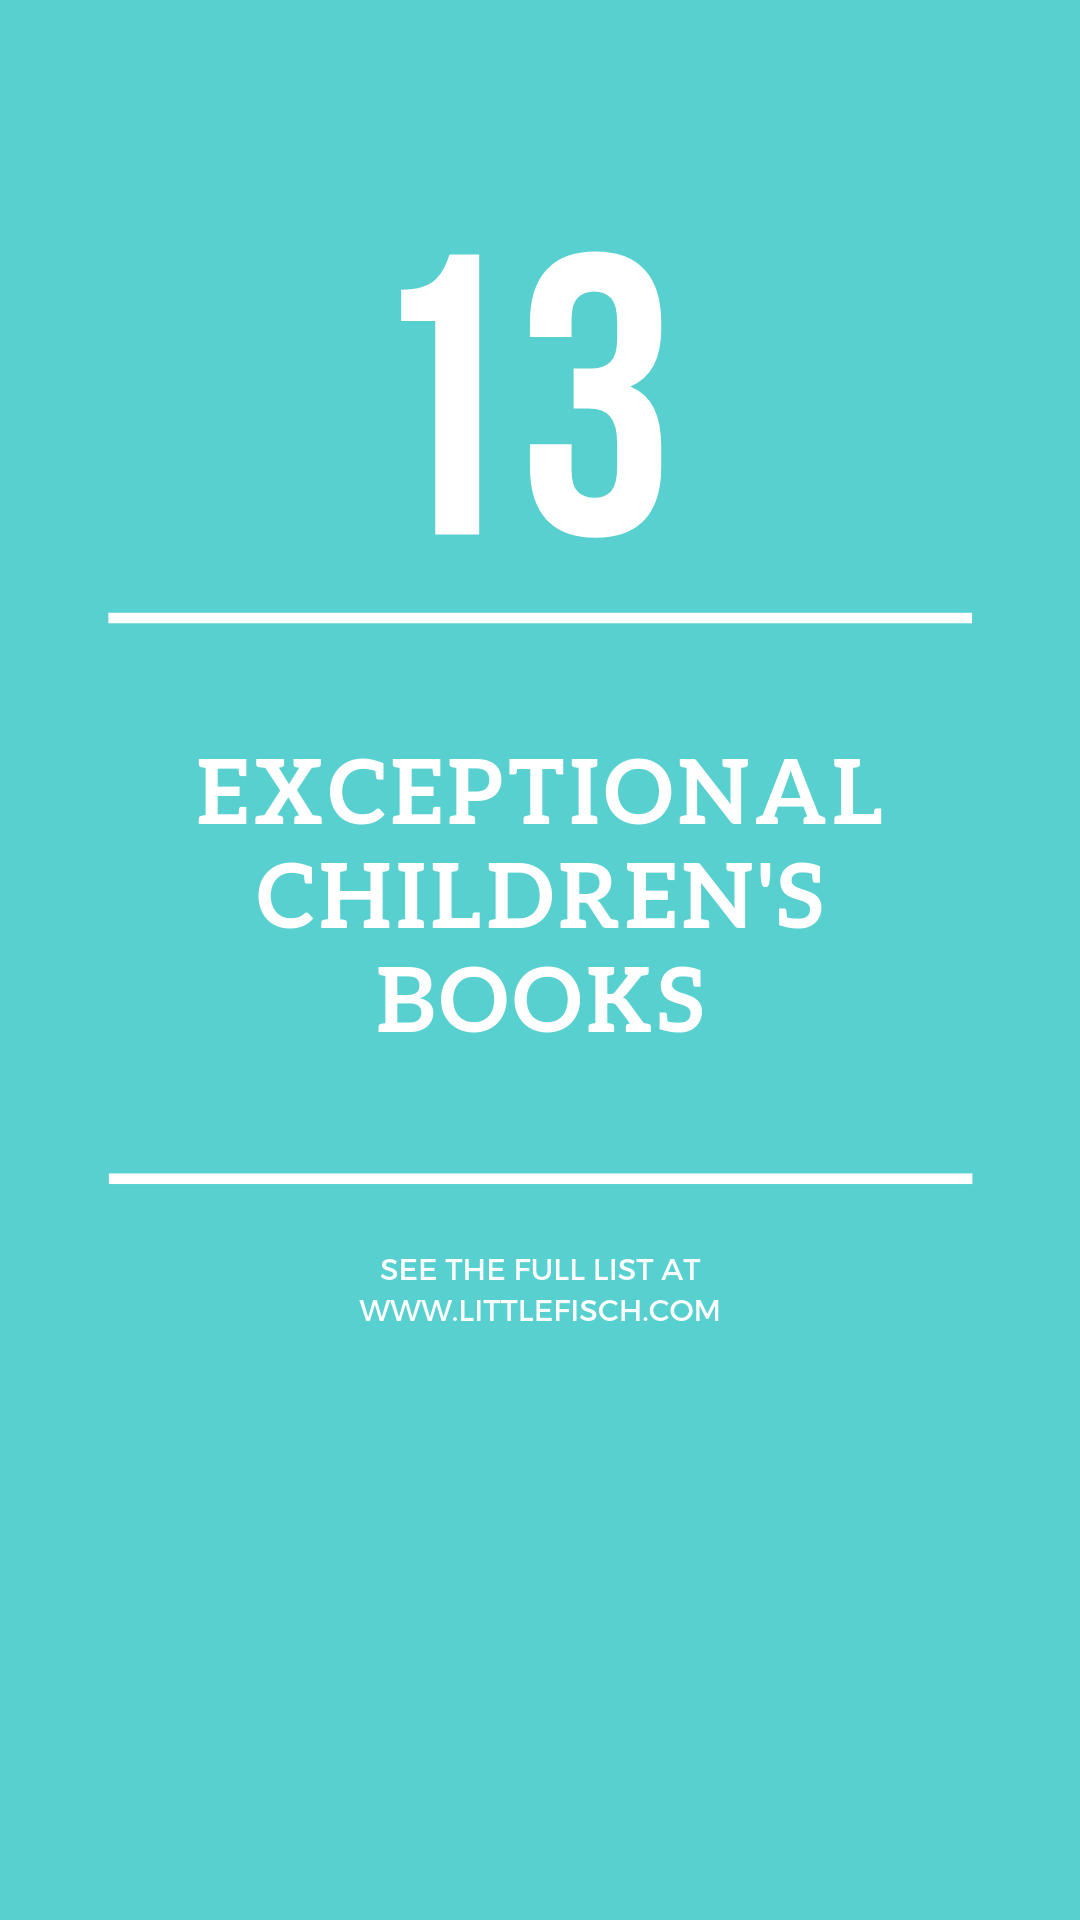 Exceptional Children's Books